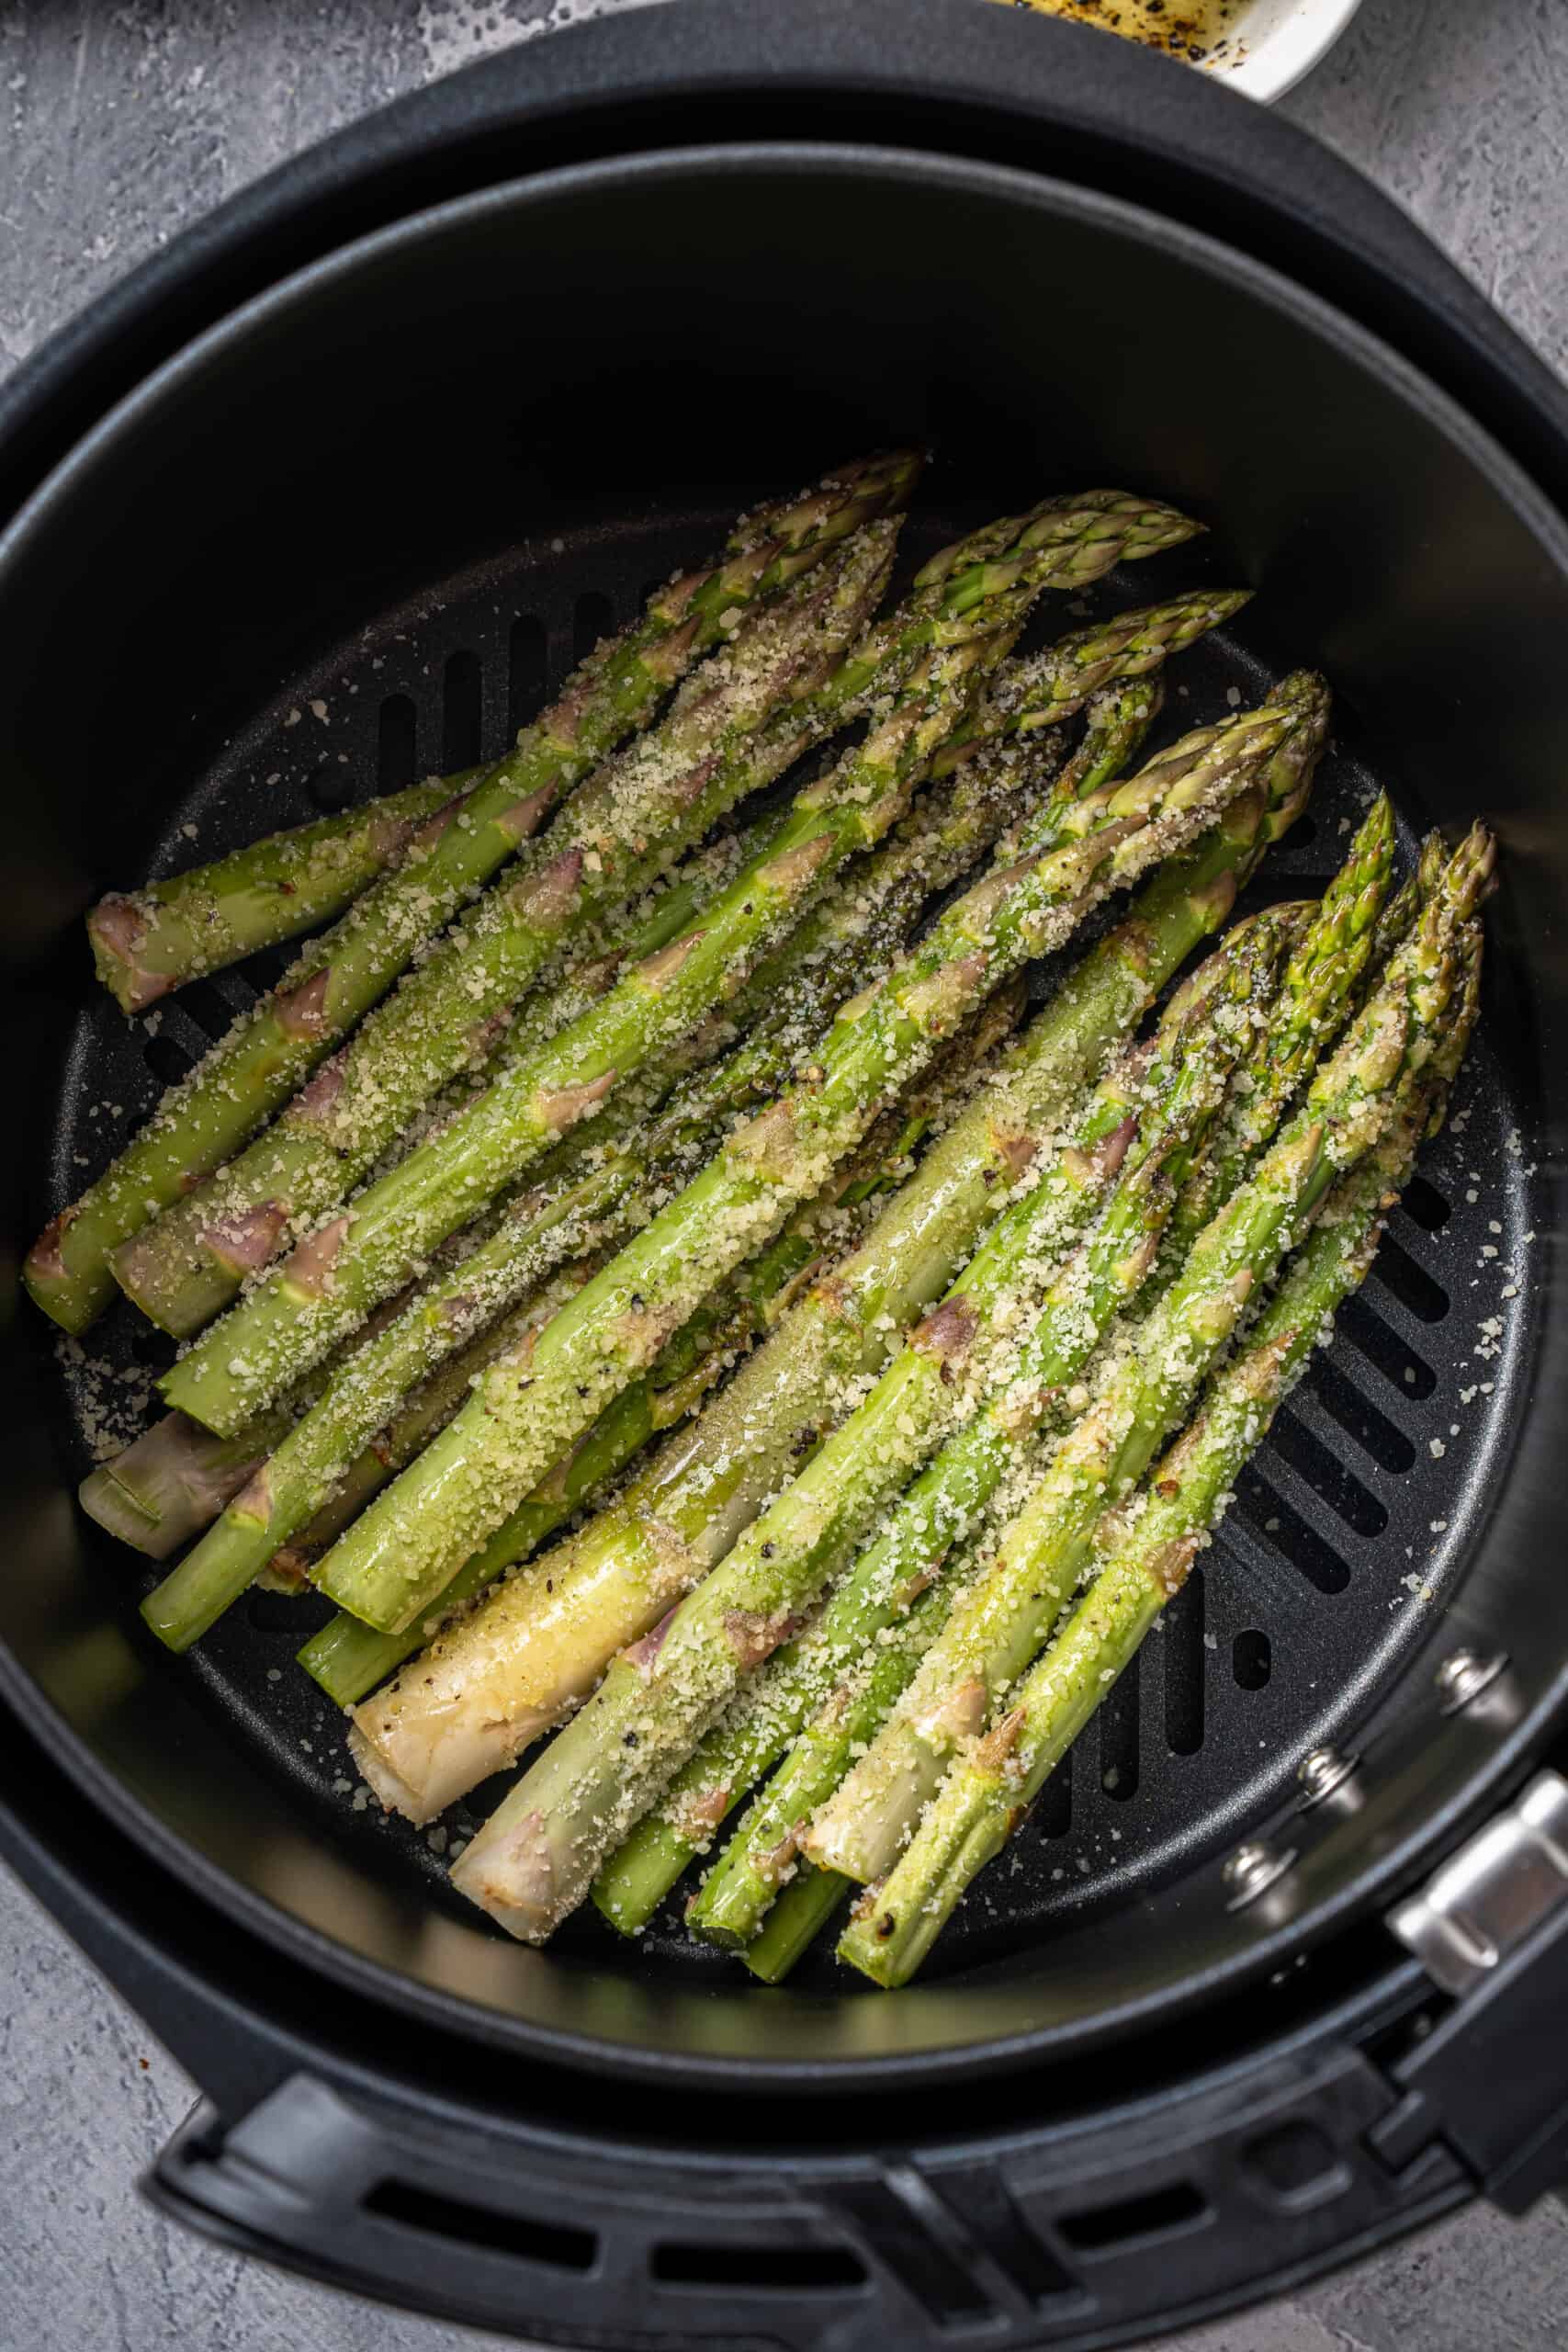 Asparagus in the air fryer